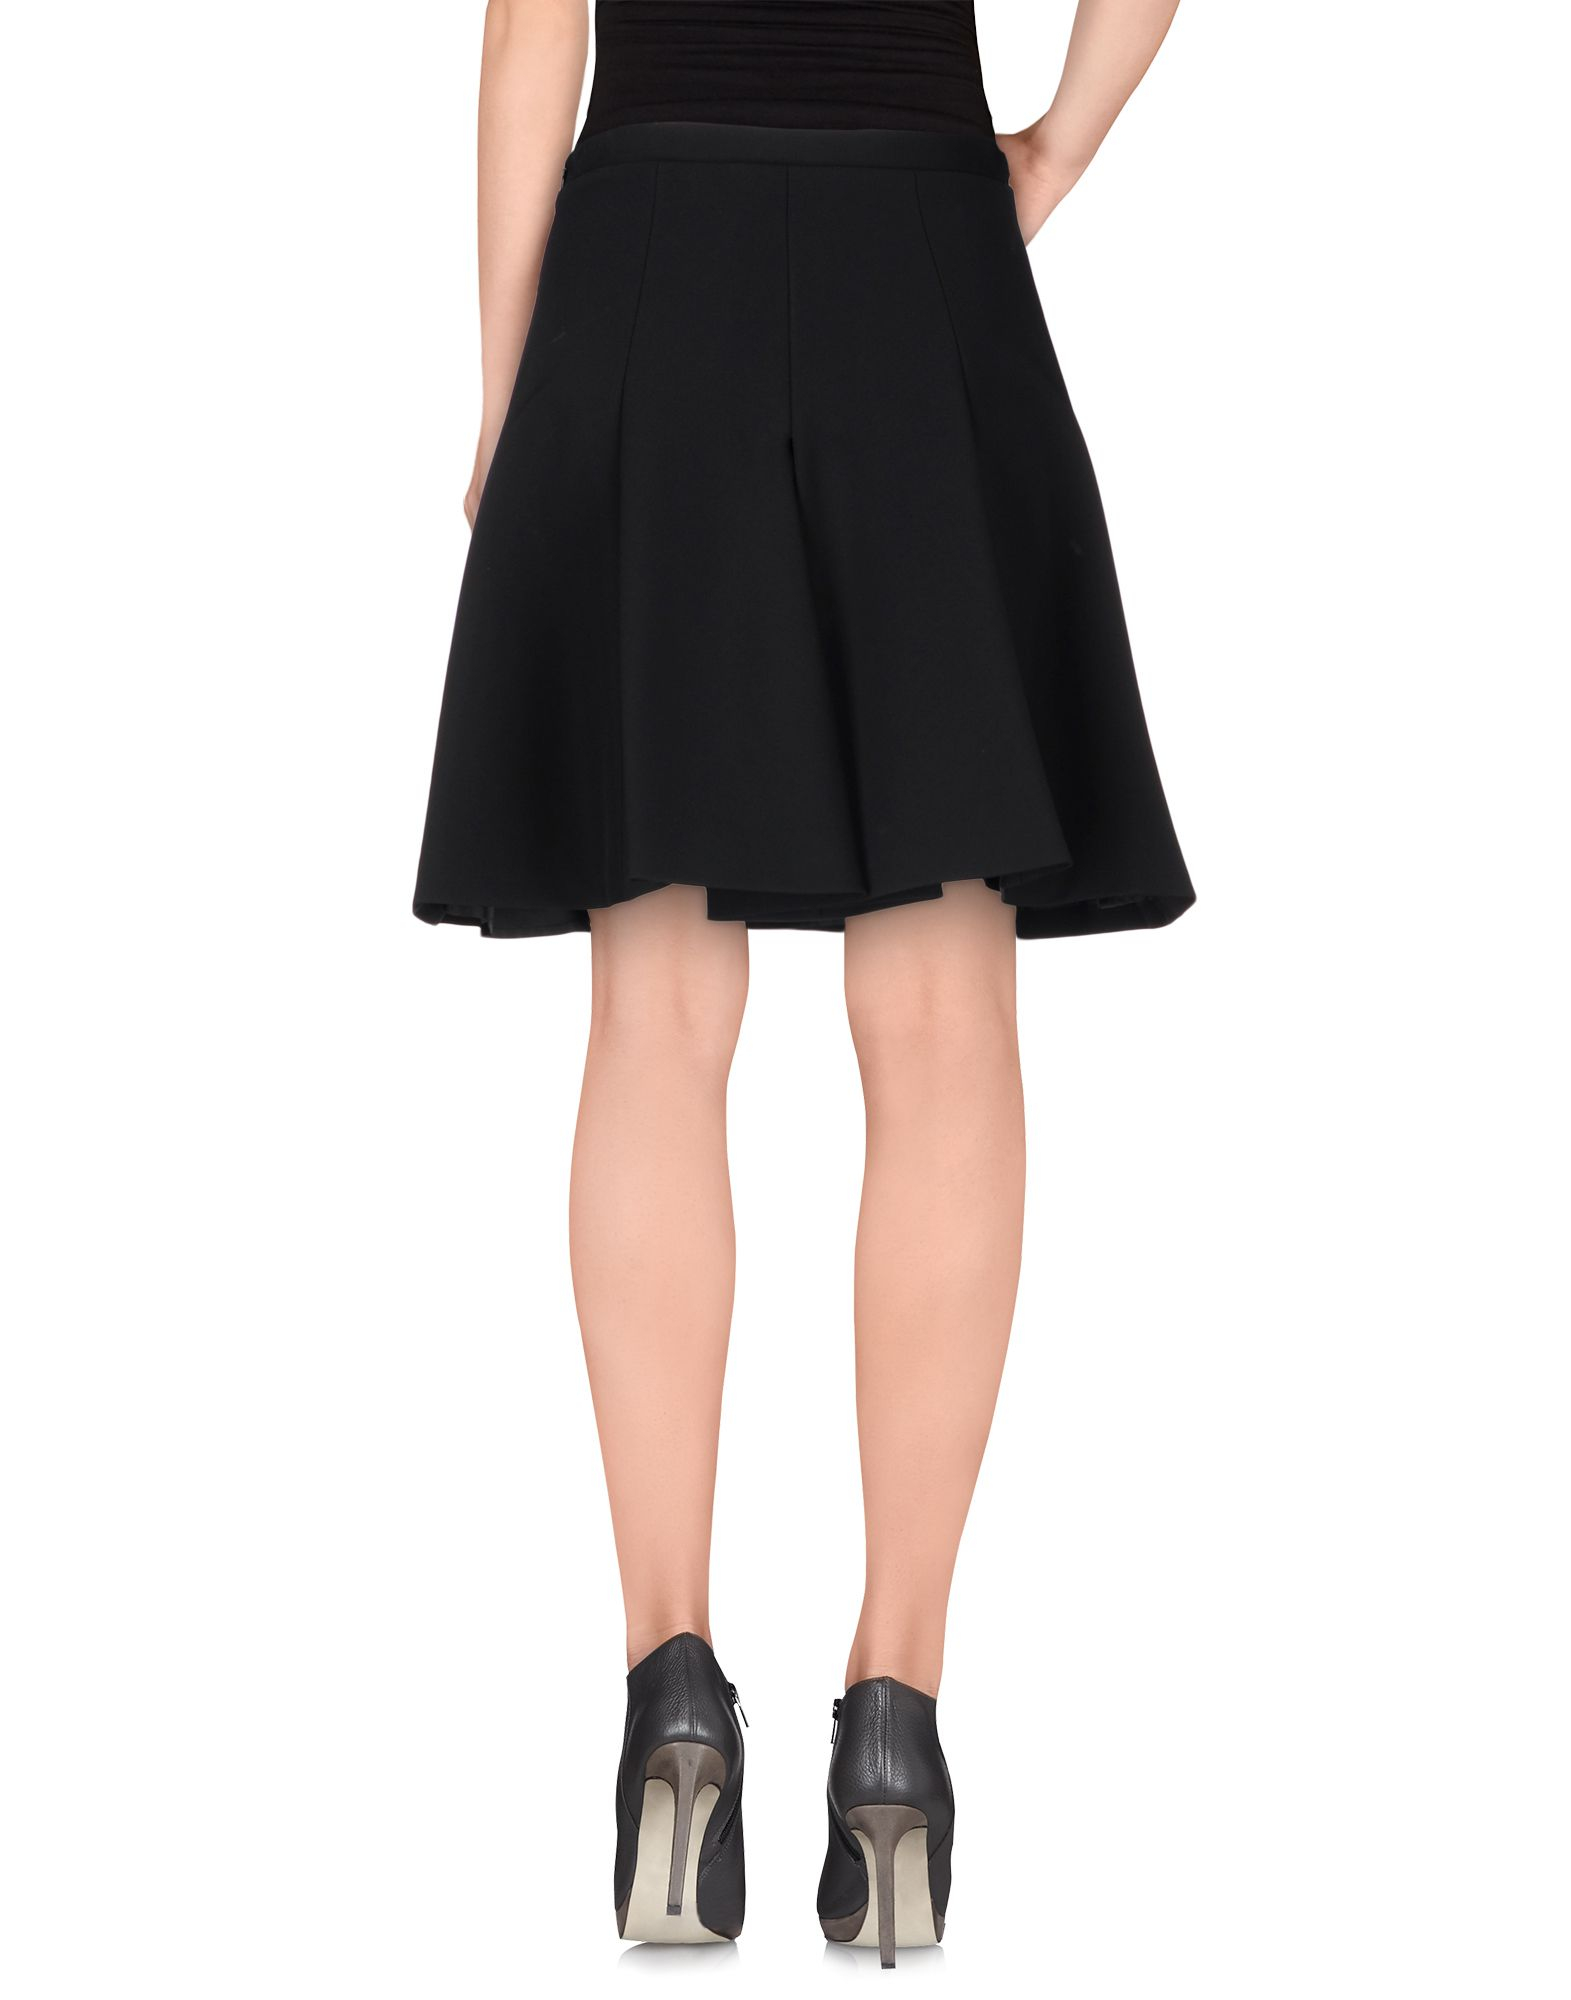 Philosophy di alberta ferretti Knee Length Skirt in Black | Lyst